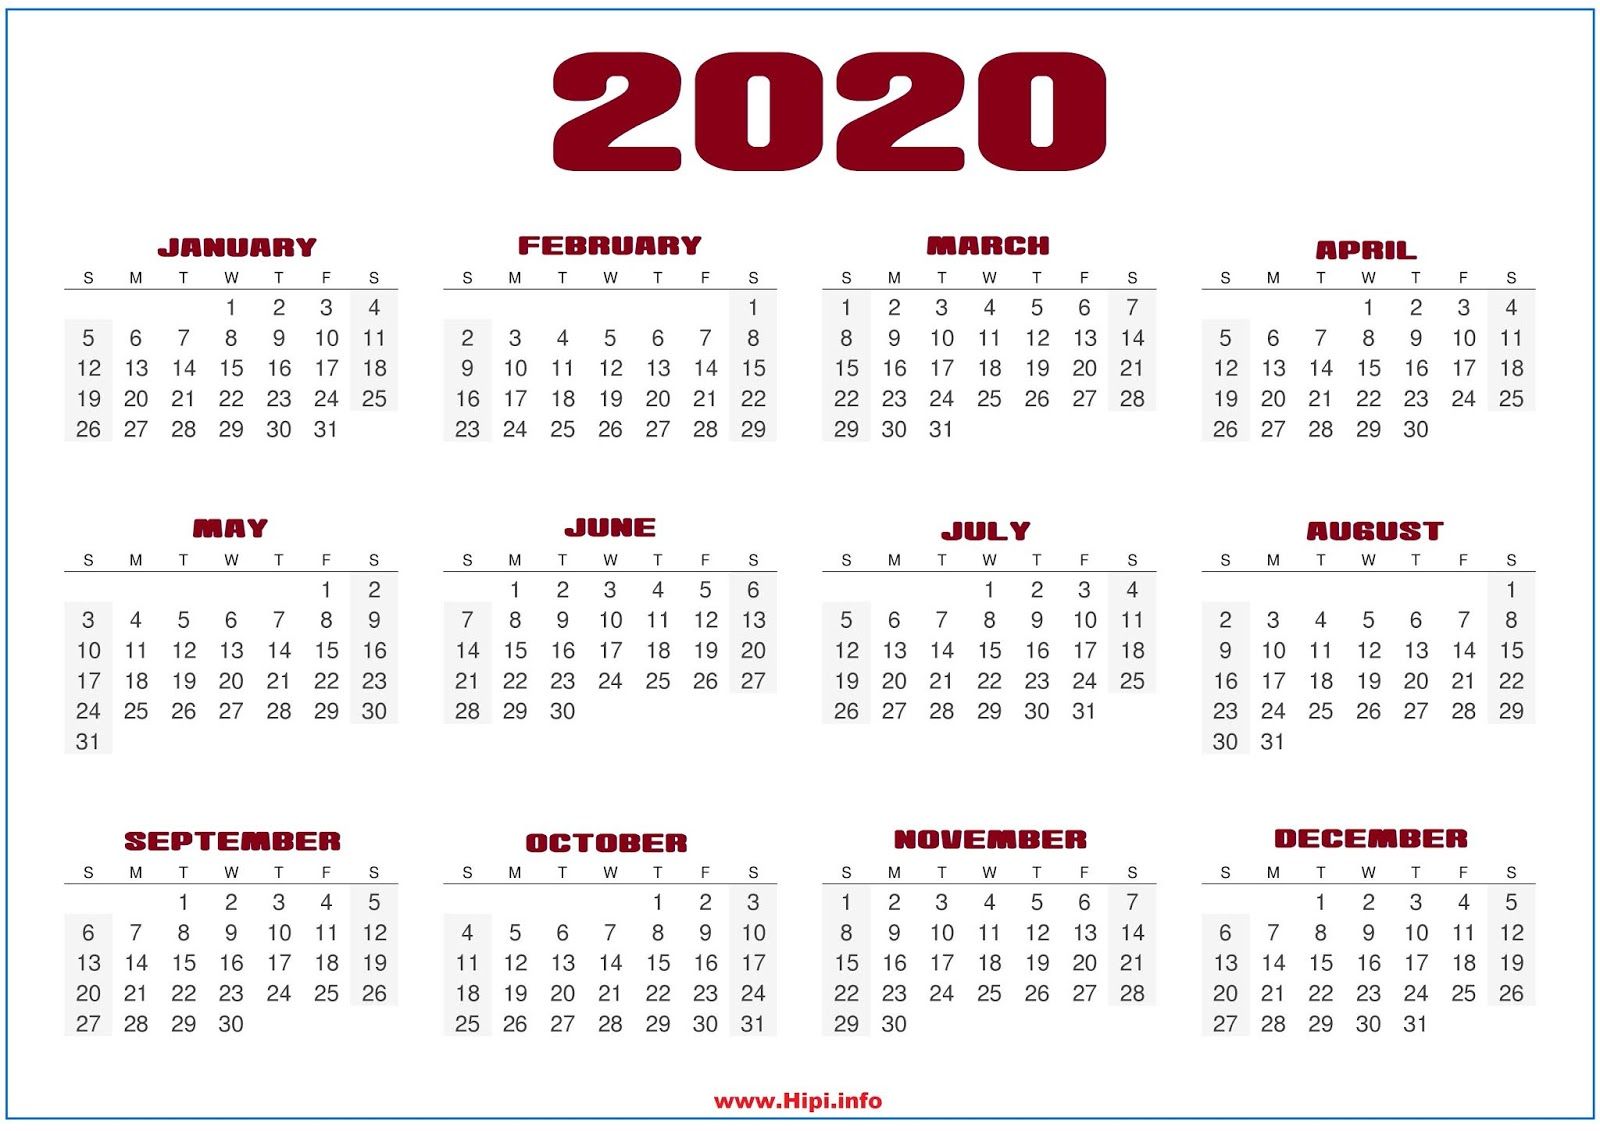 October 2020 Calendar Wallpapers   Top October 2020 Calendar 1600x1131